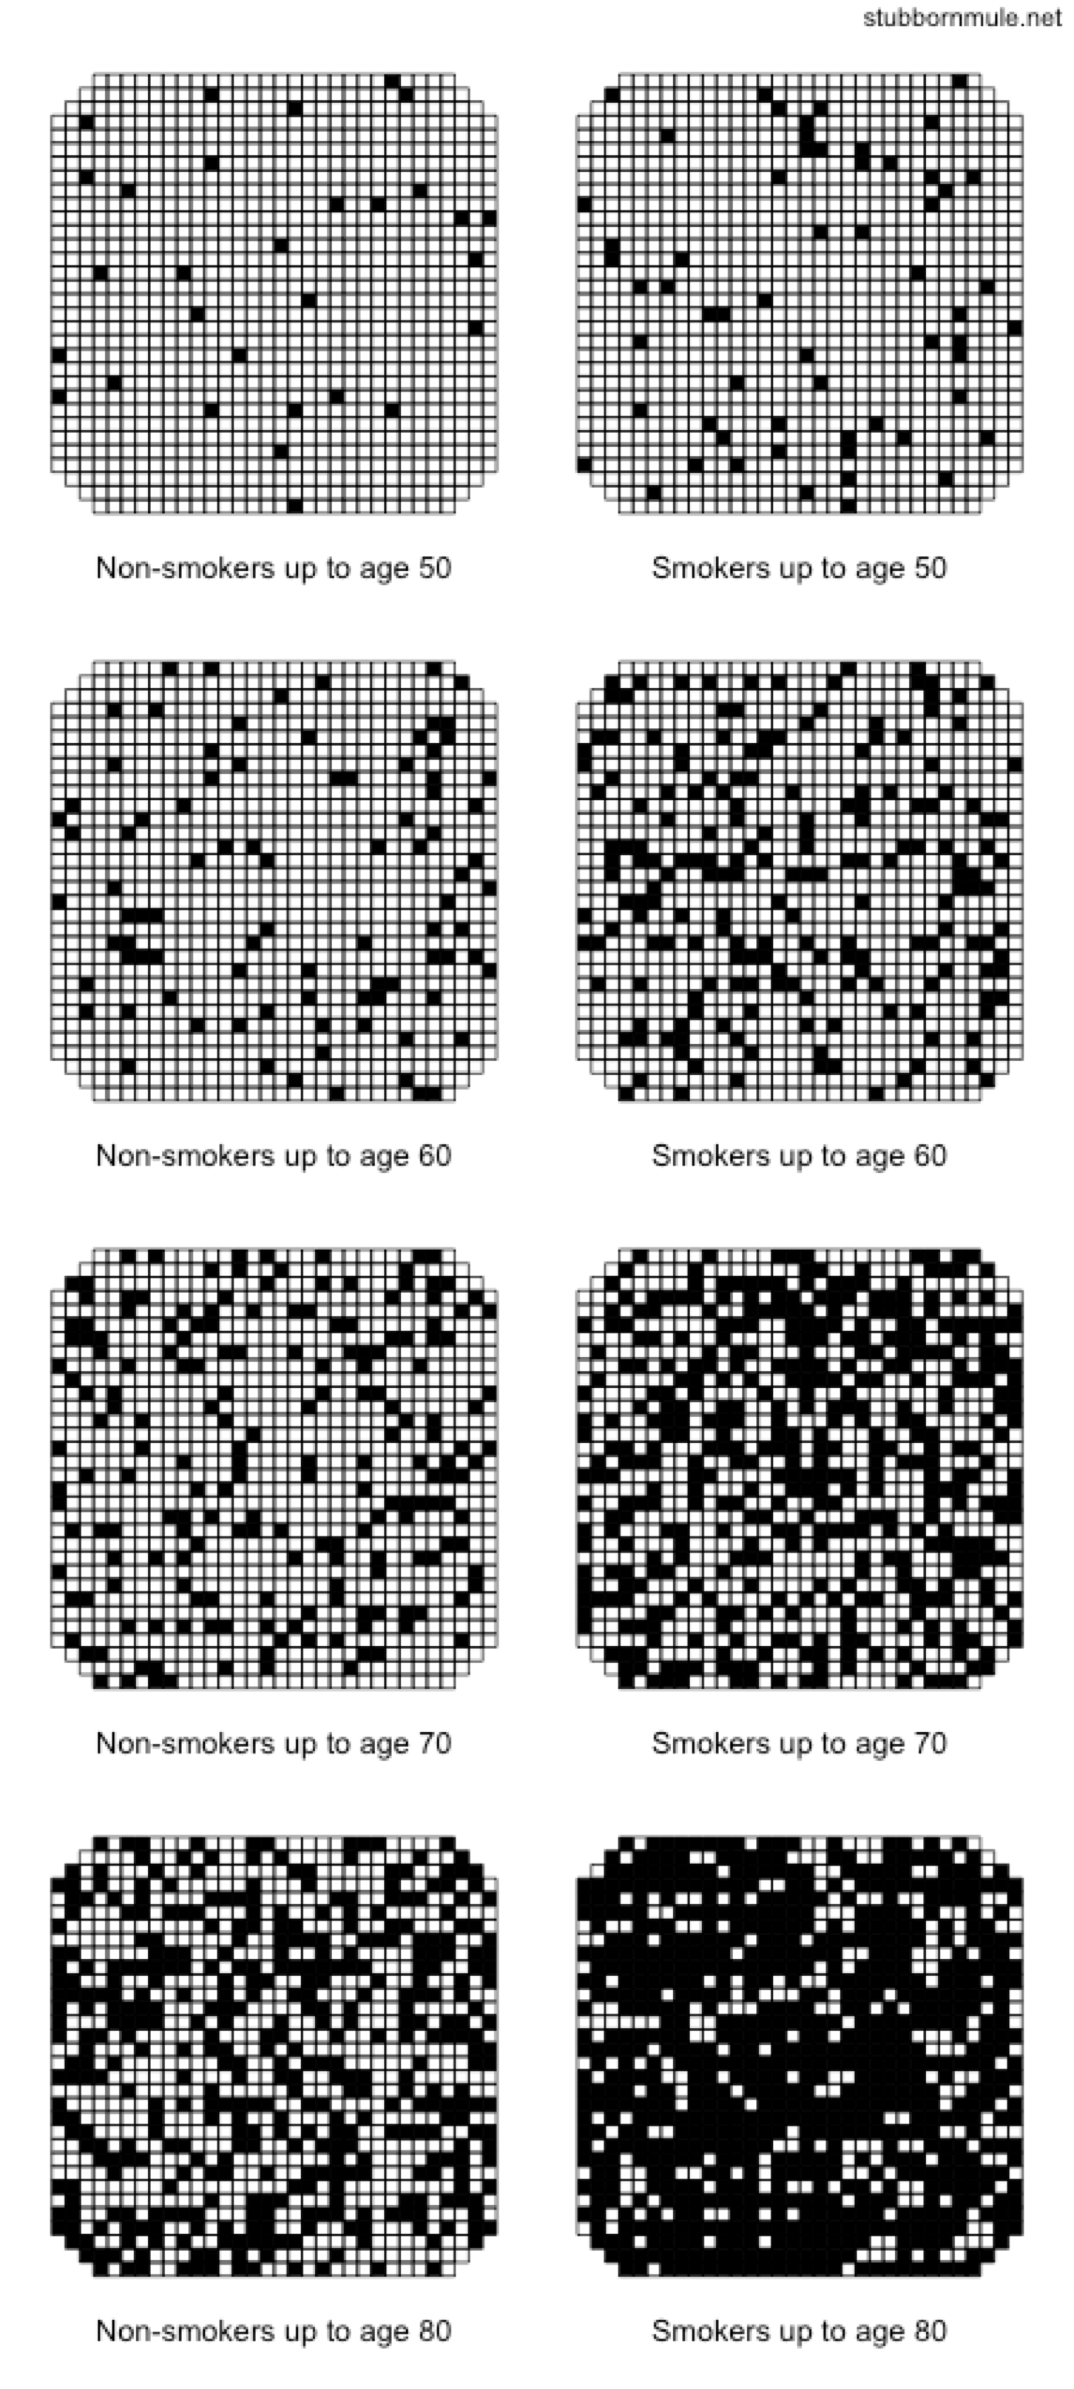 Smoker and non-smoker data via comparative visual density.